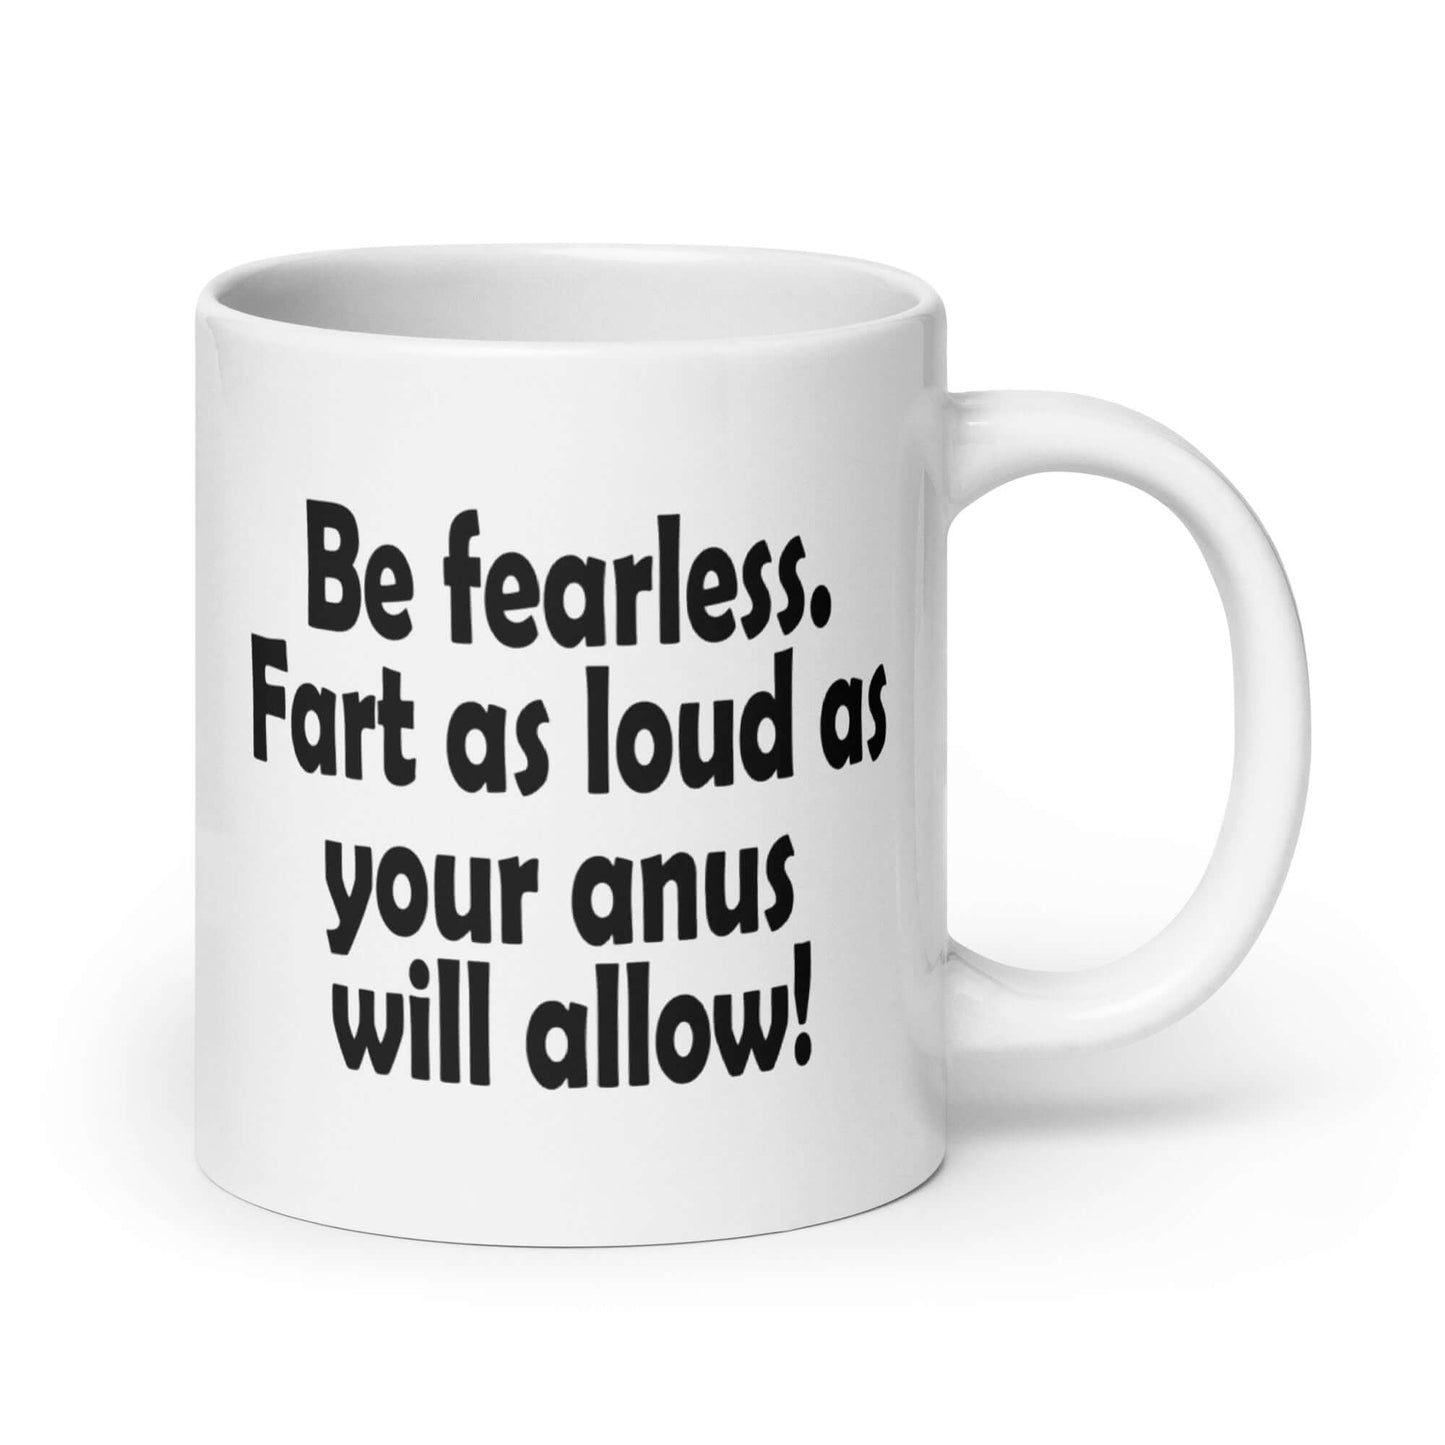 Funny motivational fearless fart joke mug